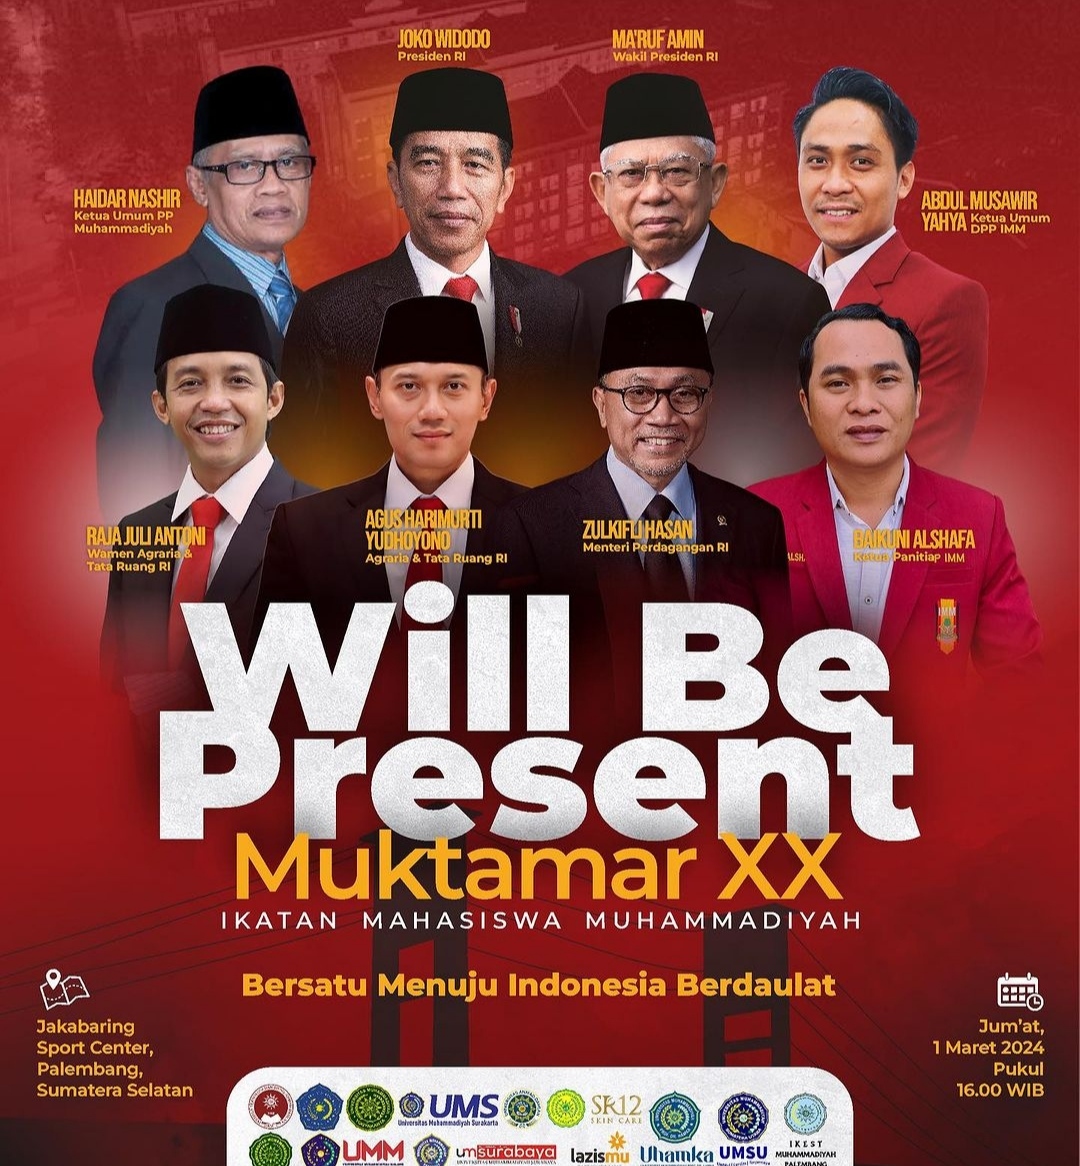 Presiden Jokowi Bakal Hadiri Muktamar XX IMM di JSC Palembang Malam ini, Ada Diskusi dan Dialog